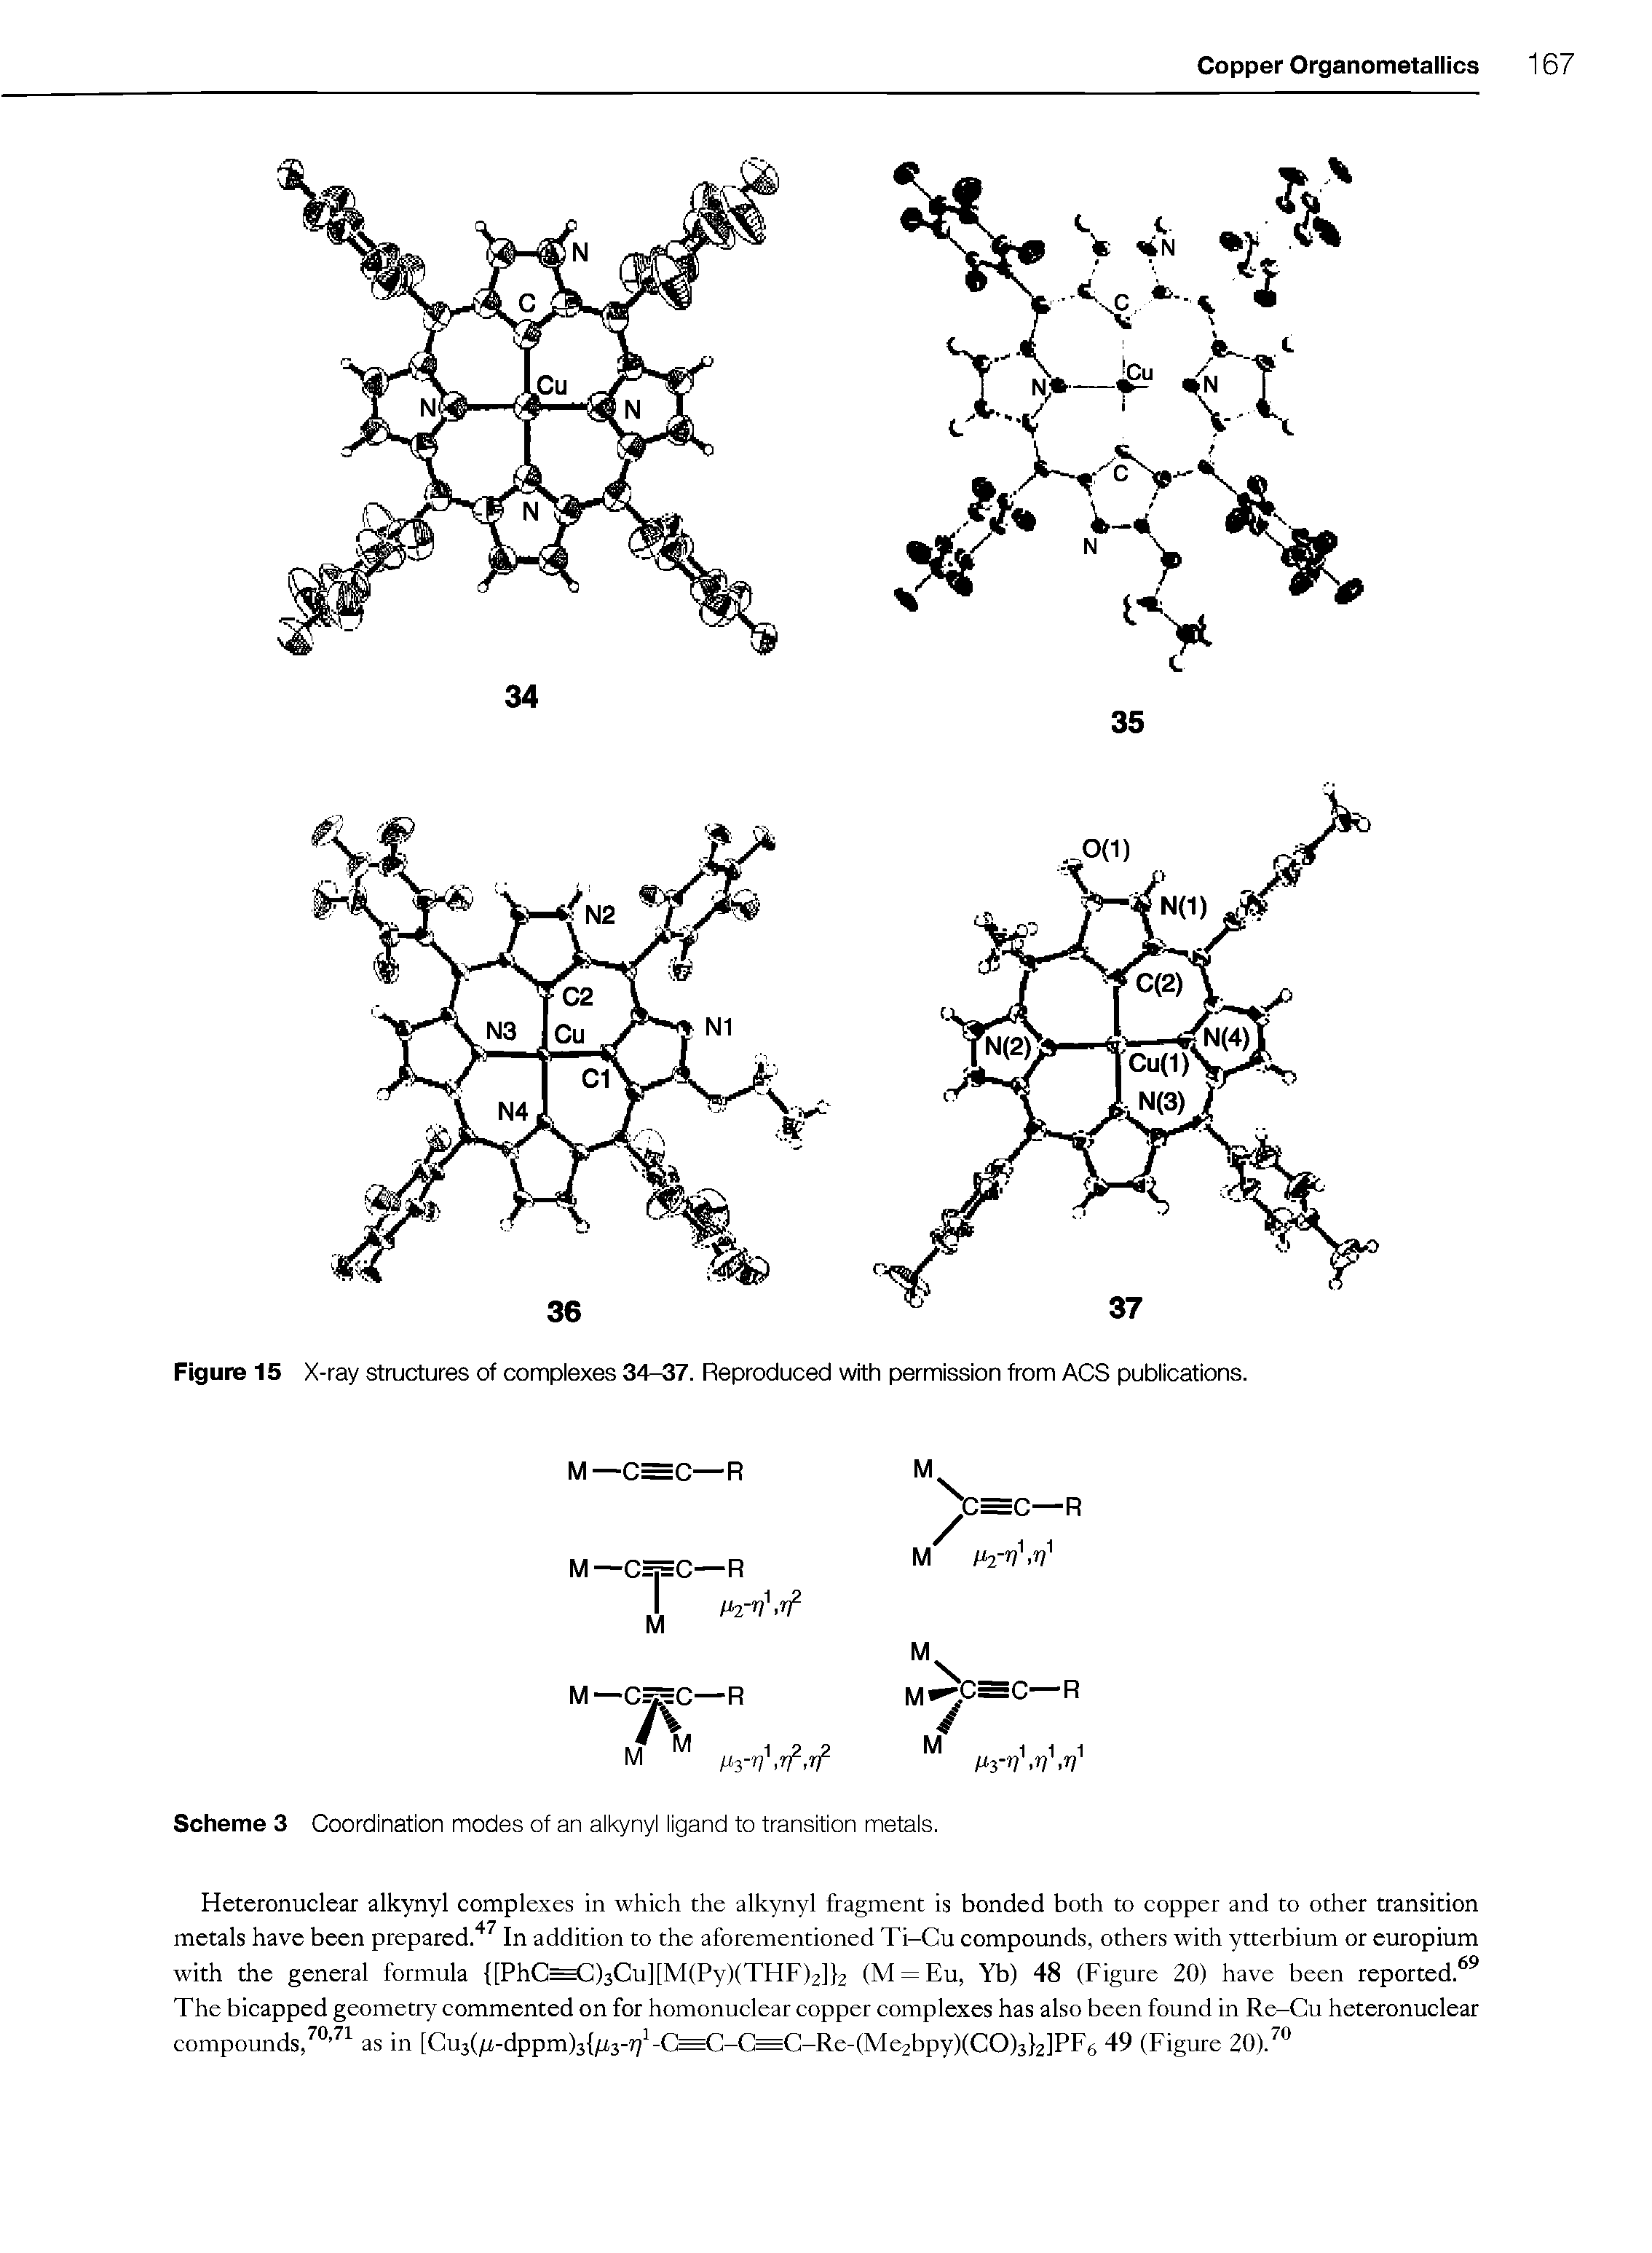 Scheme 3 Coordination modes of an alkynyl ligand to transition metals.